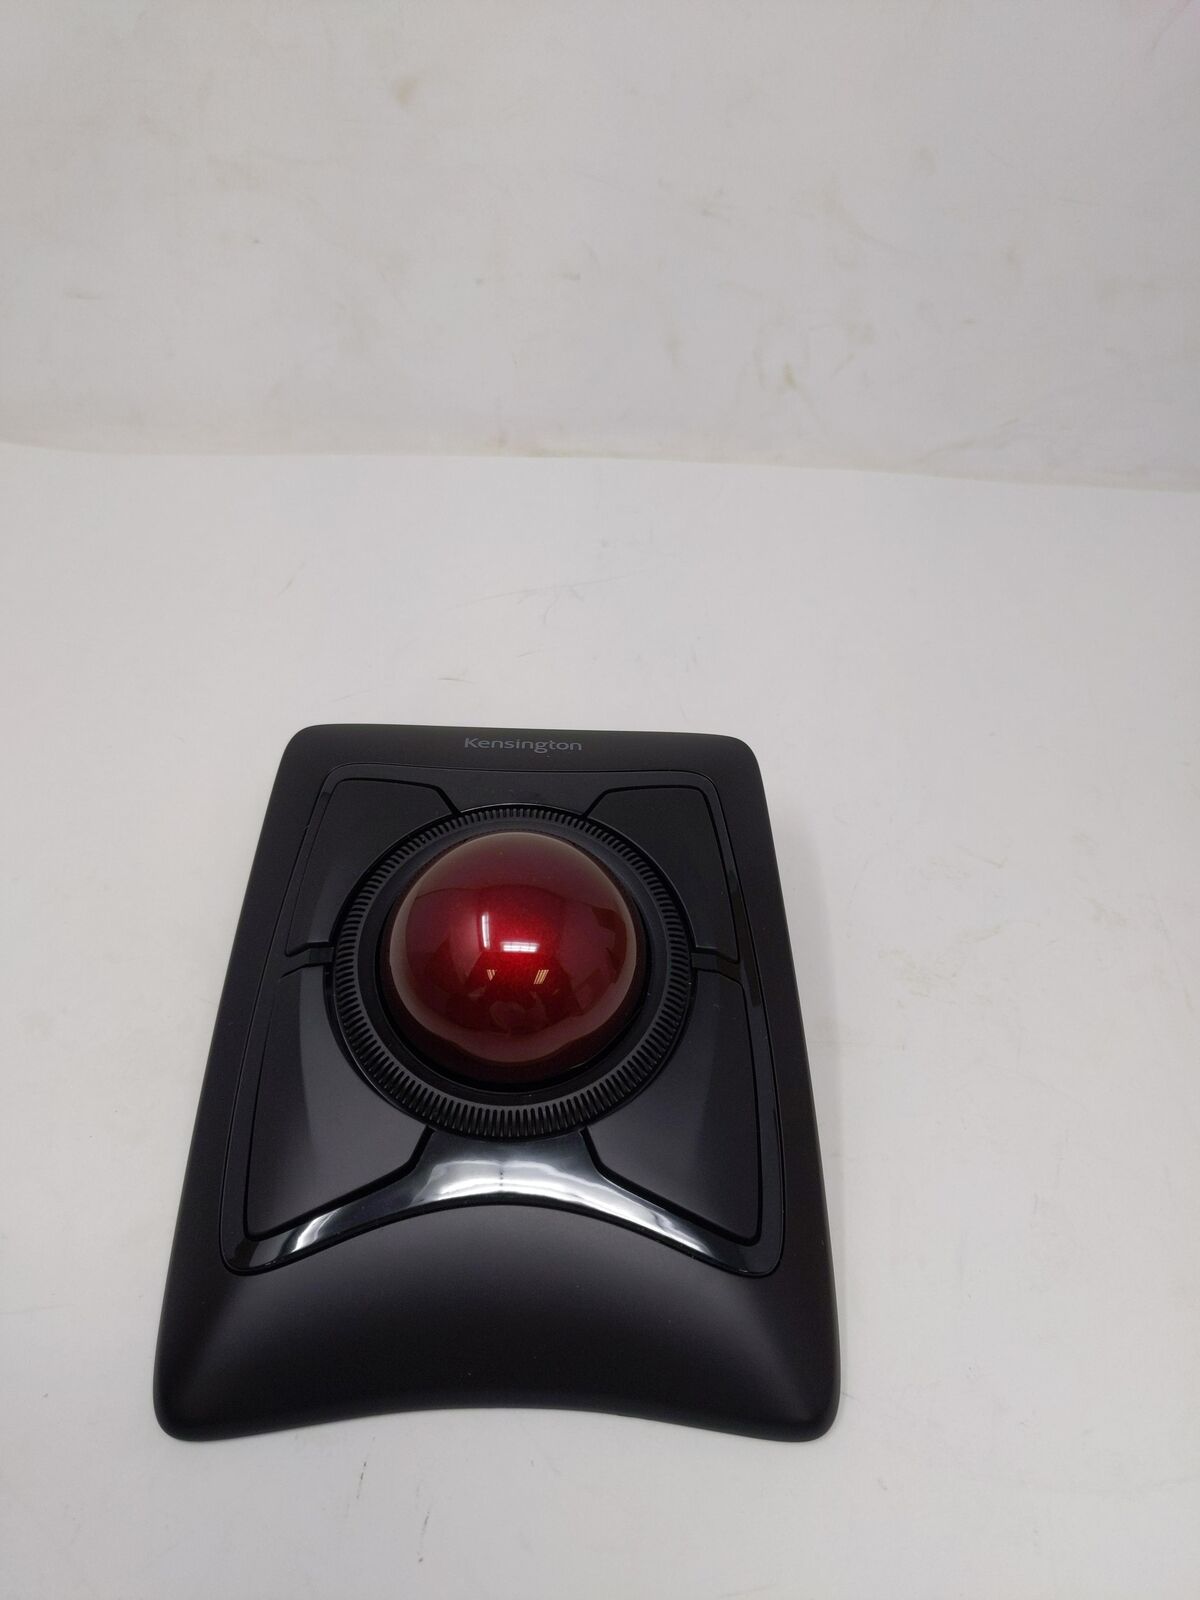  Kensington Expert Wireless Trackball Mouse (K72359WW) Black